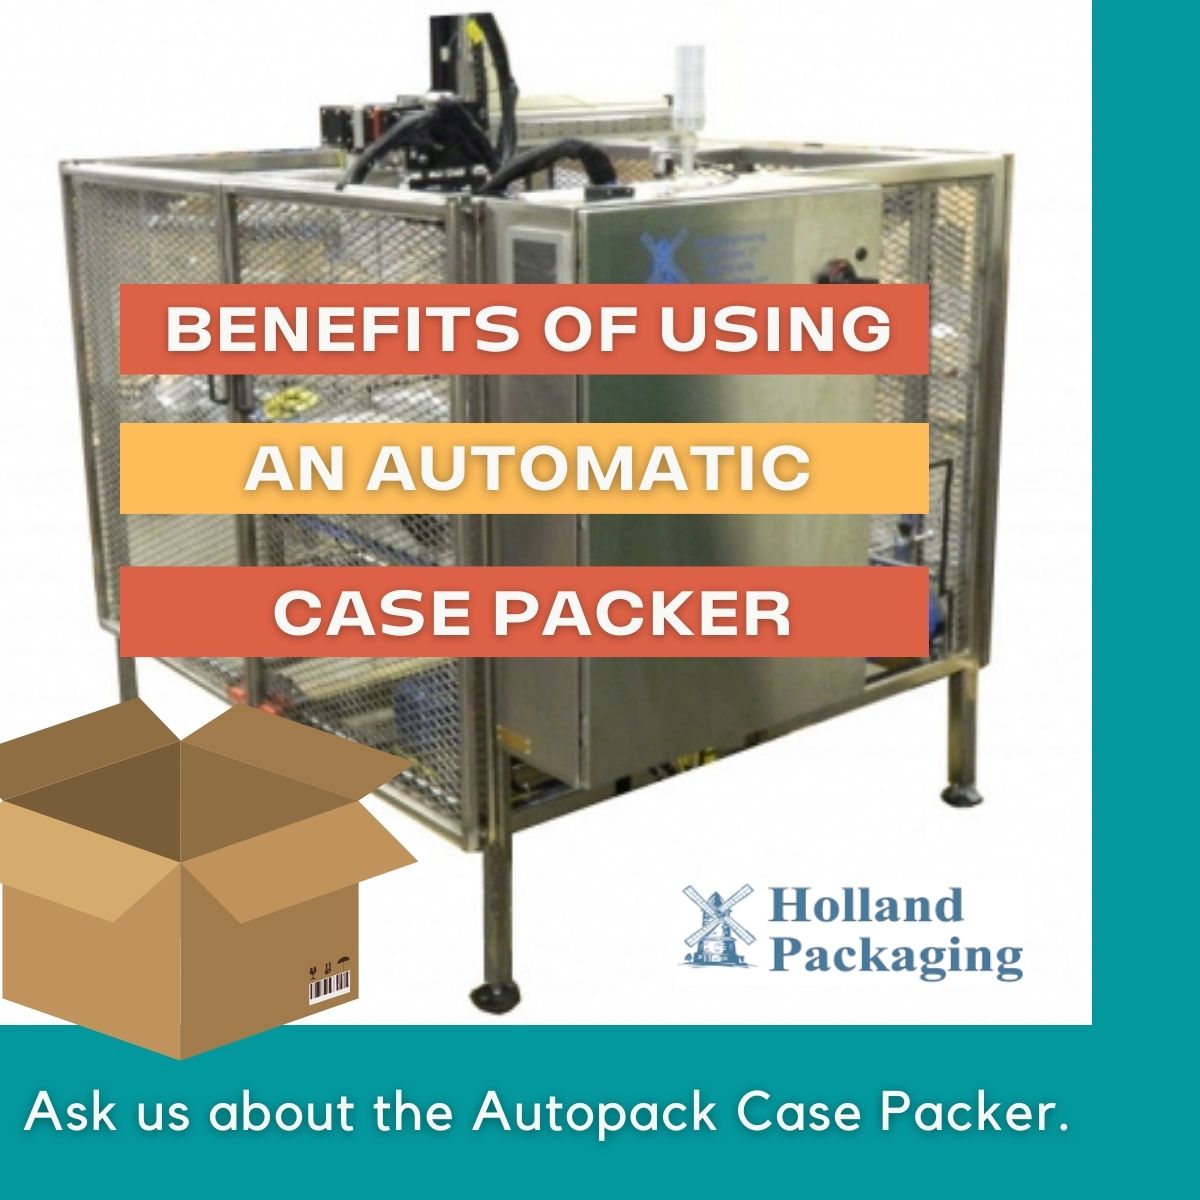 Autopack case packer benefits